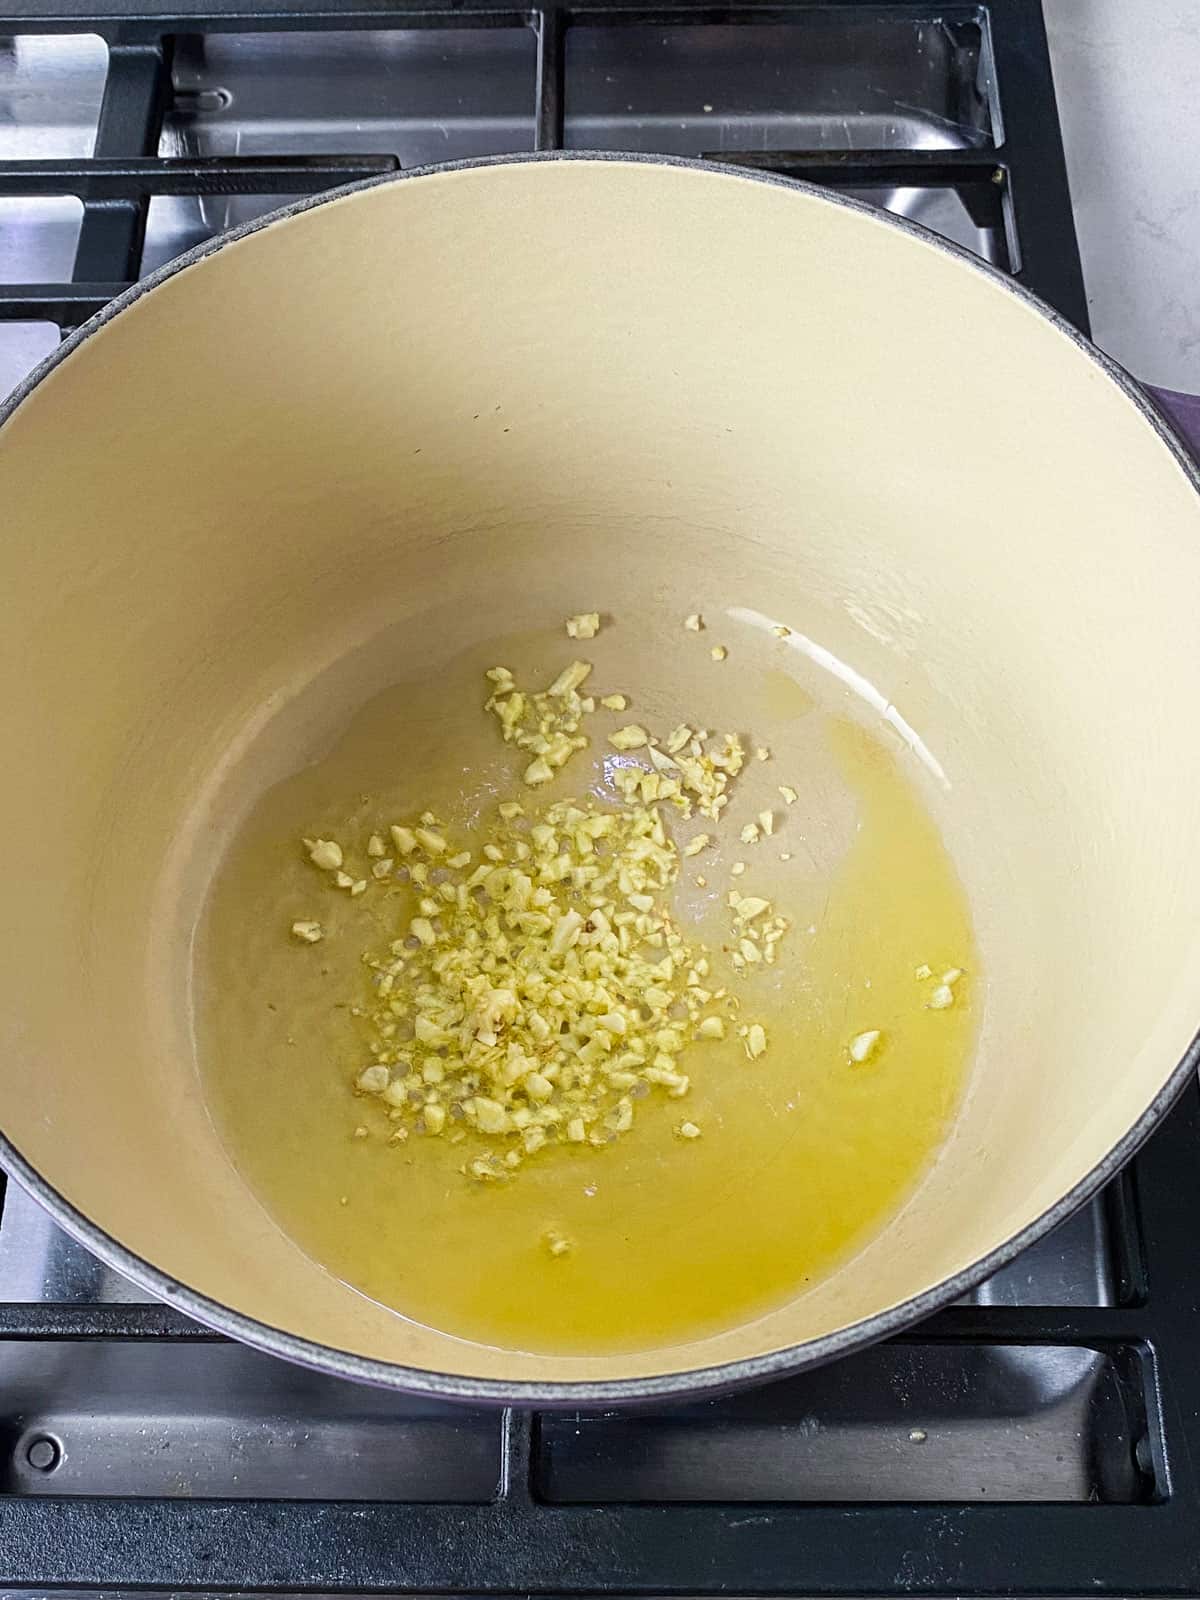 Saute chopped garlic in olive oil until fragrant.